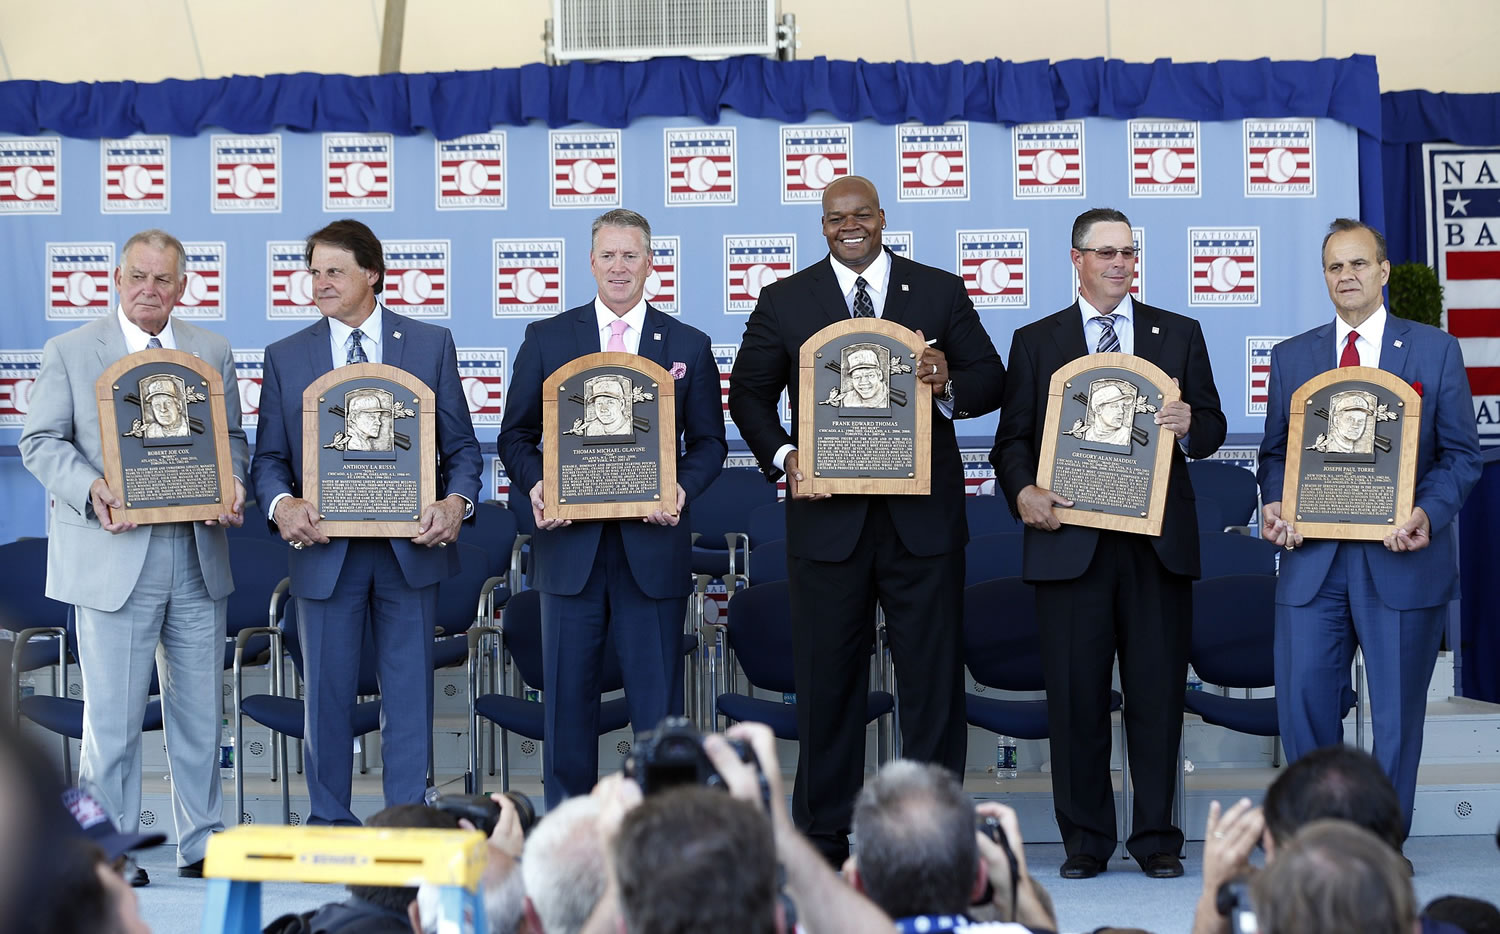 Tony La Russa Heads Into the Baseball Hall of Fame